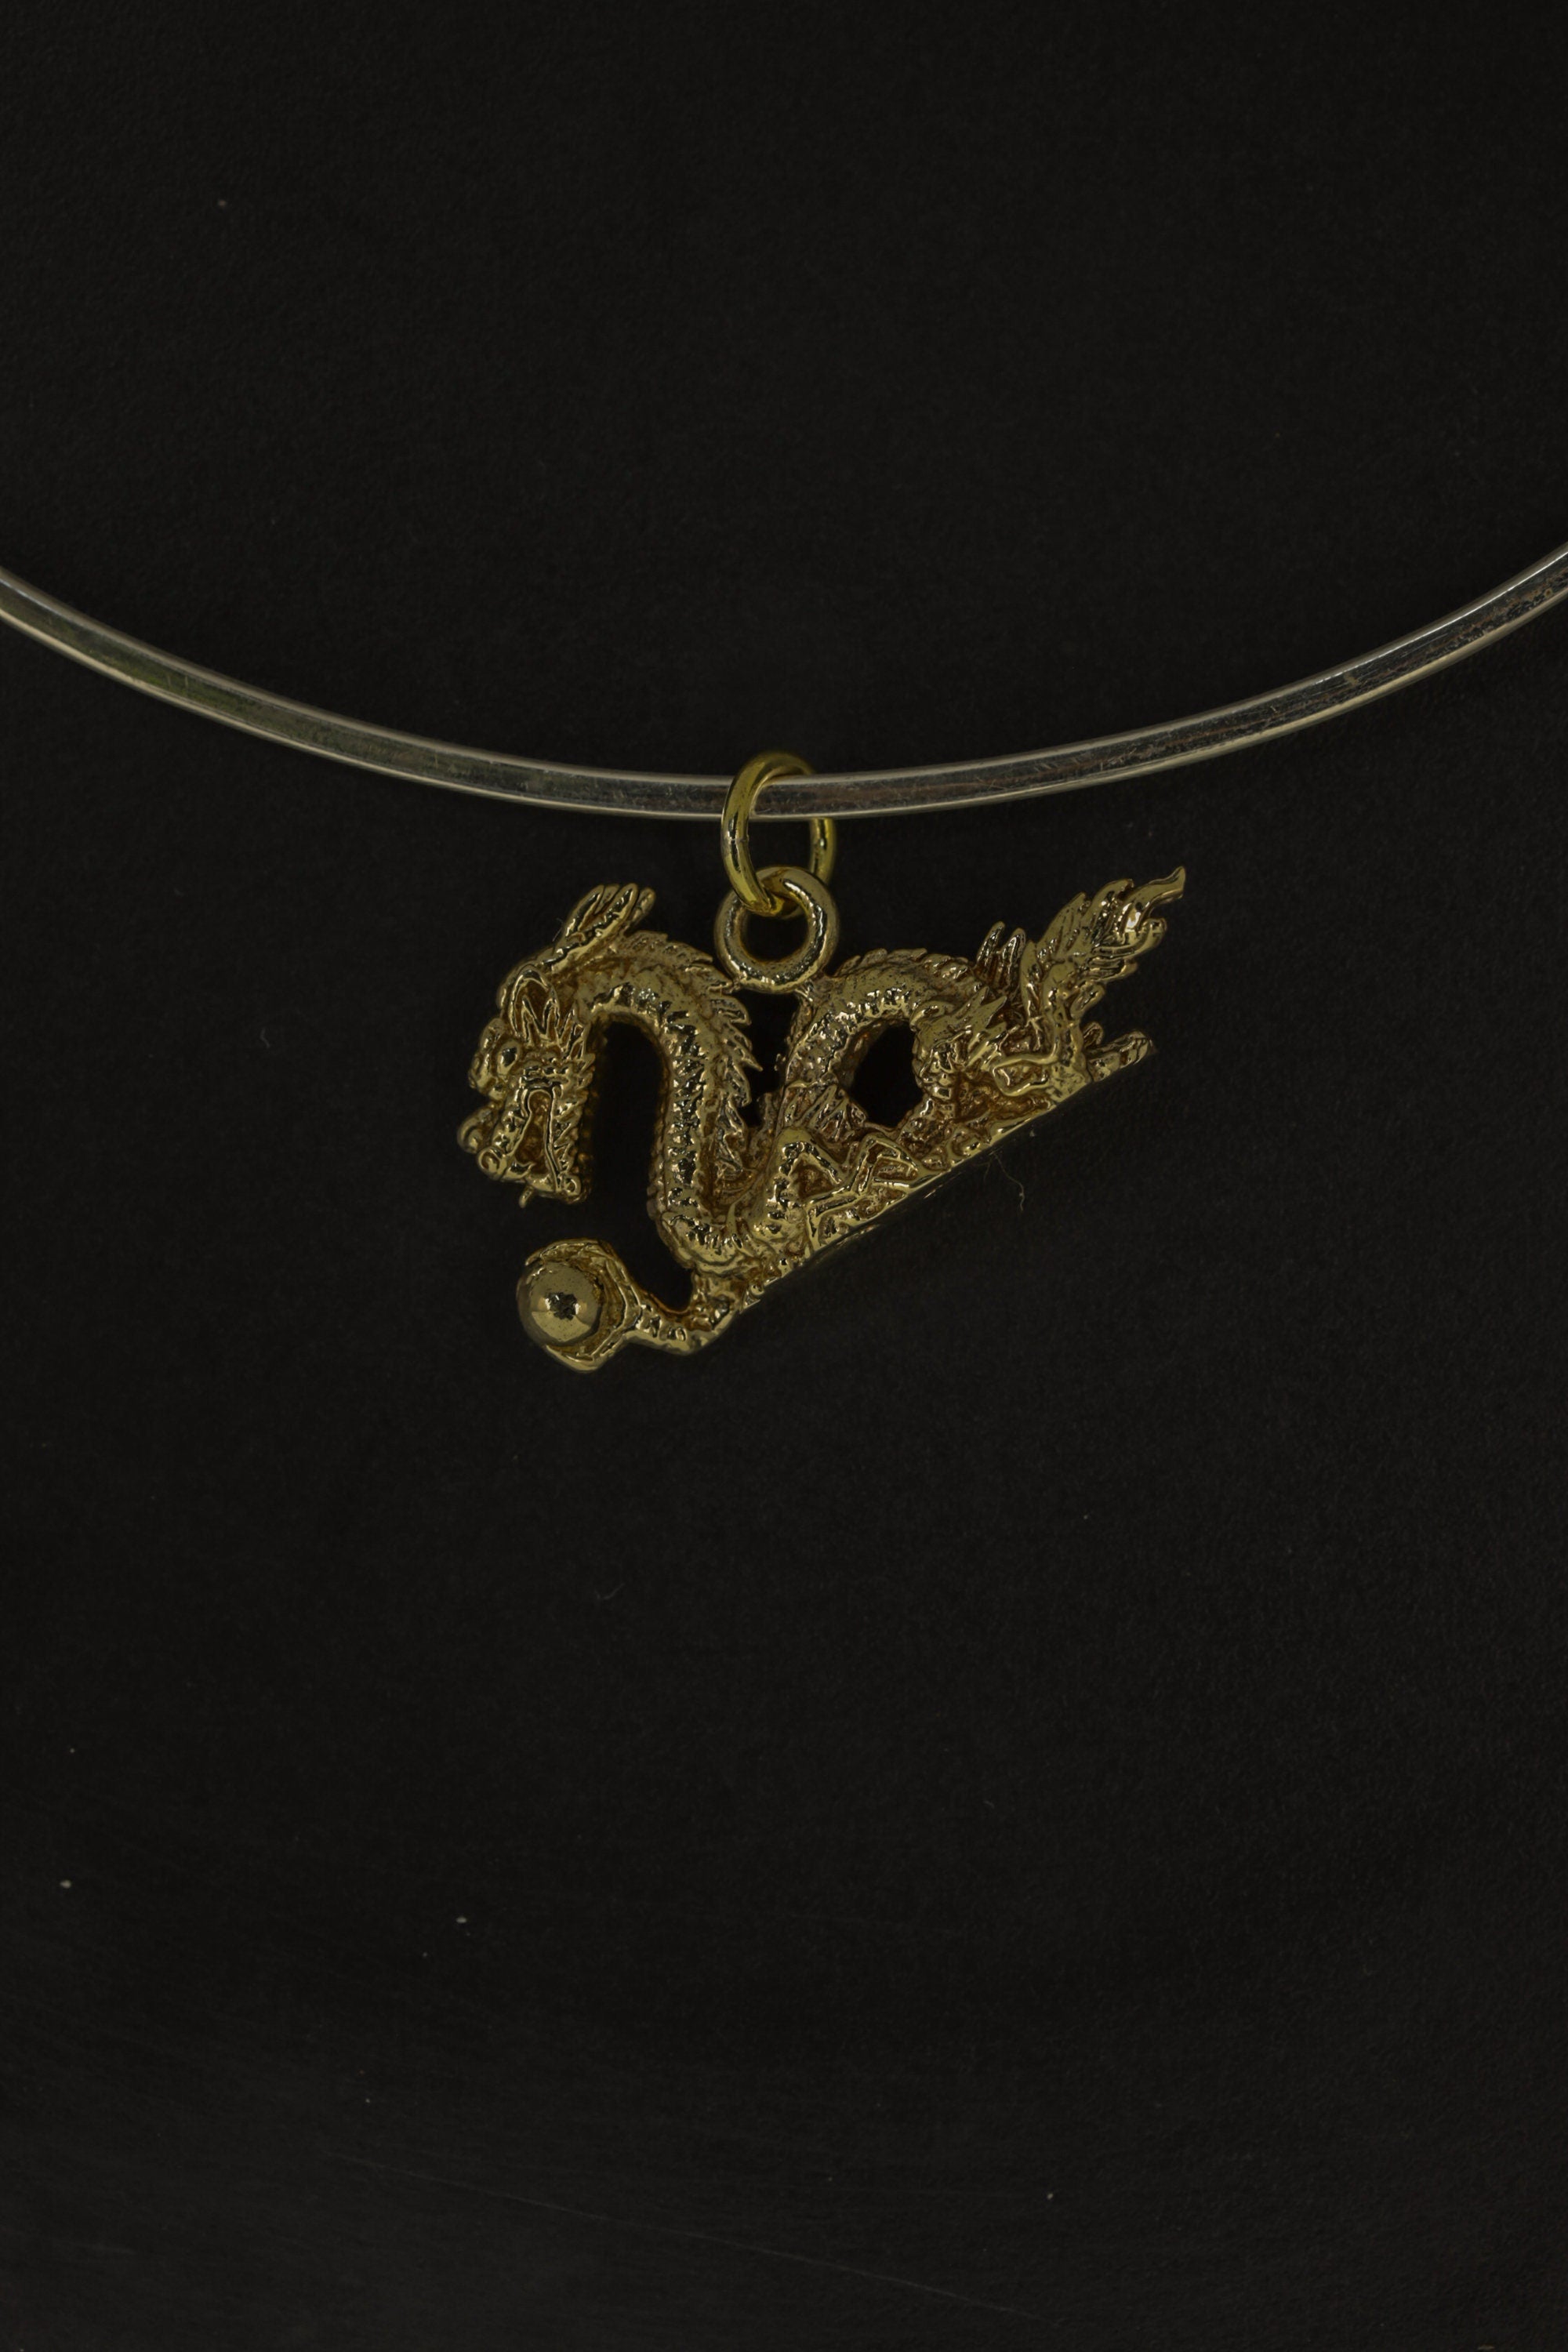 Aurelian Wyvern Crest - Gold Plated Brass Cast - Pendant Necklace